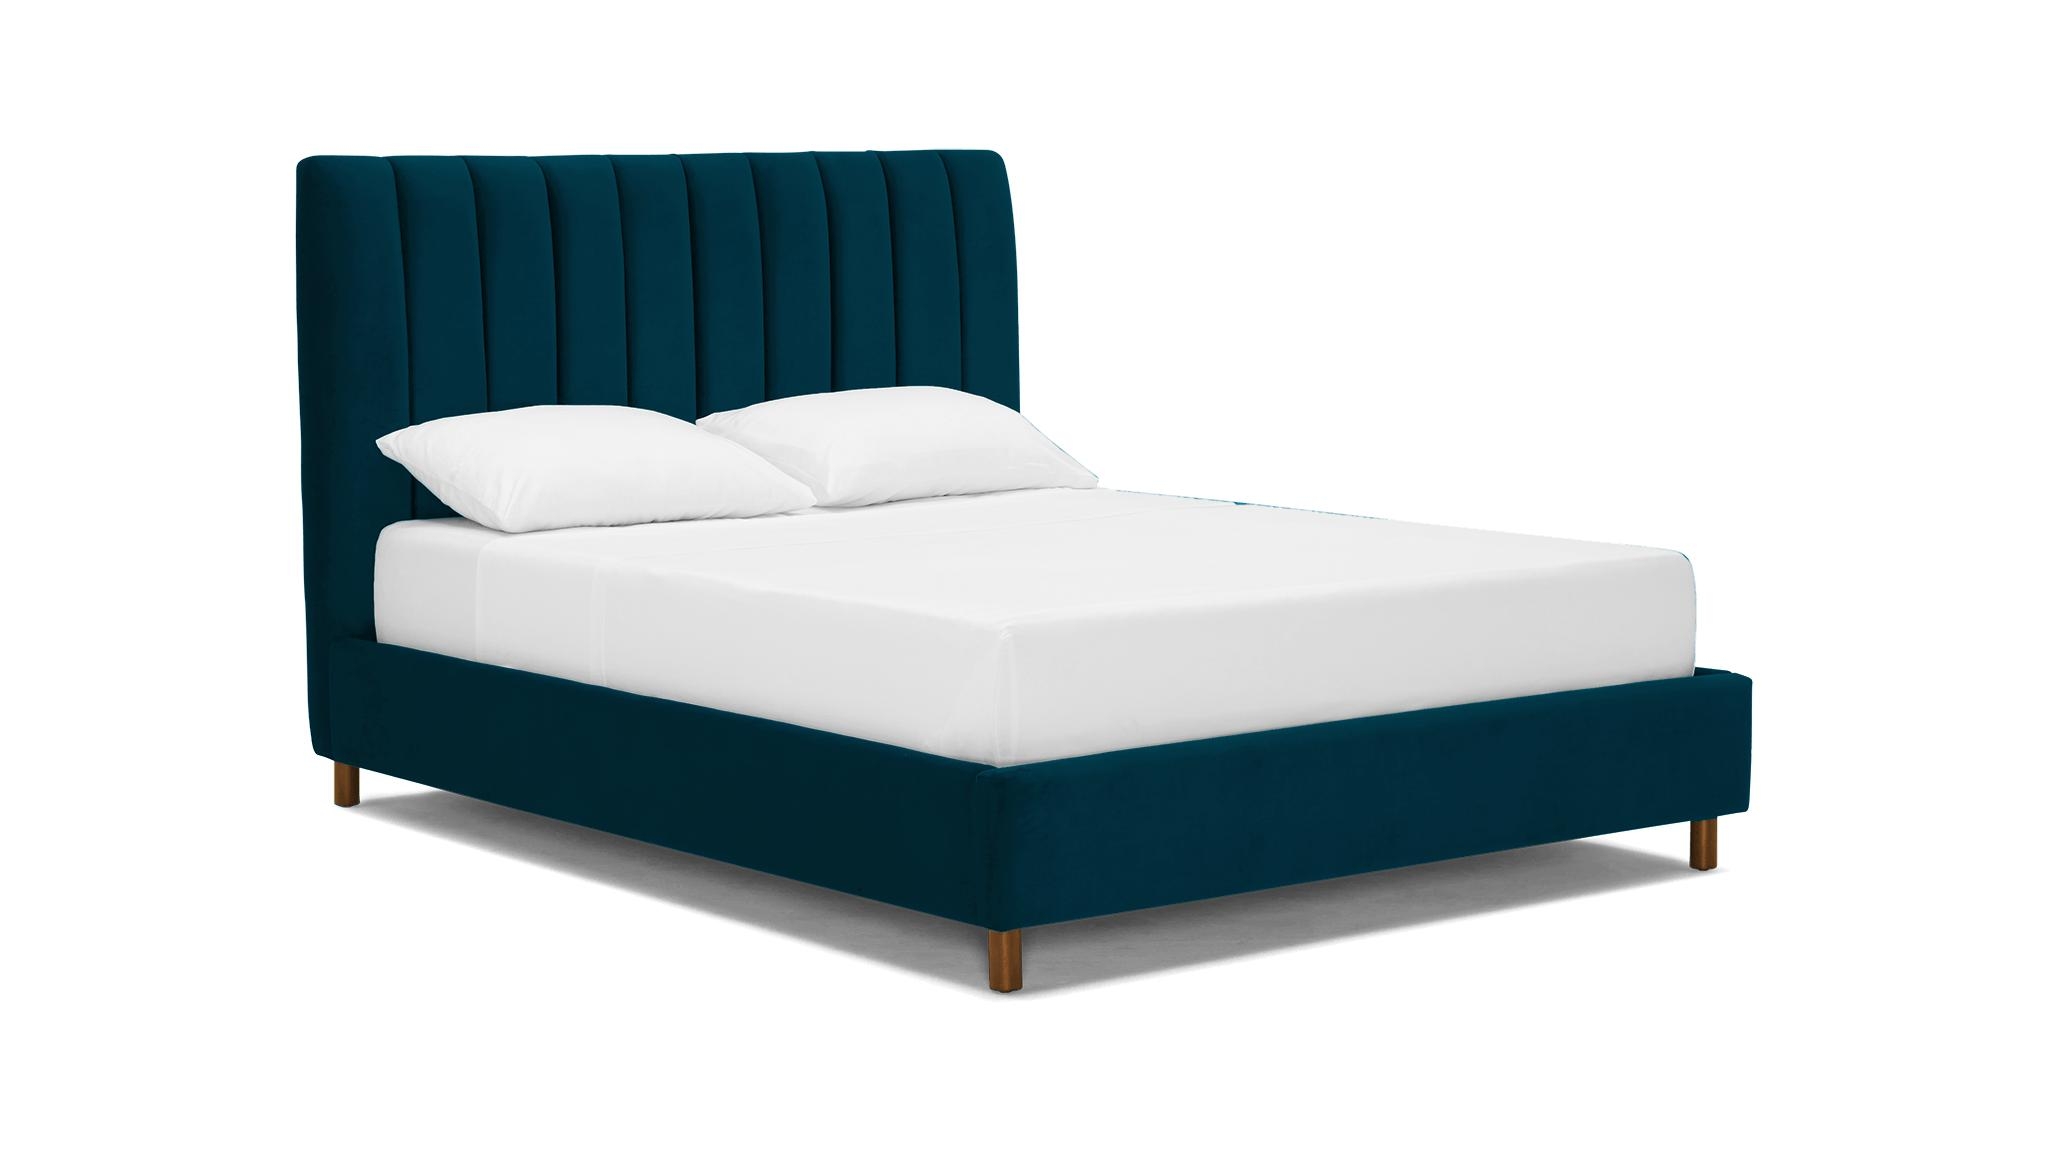 Blue Lotta Mid Century Modern Bed - Key Largo Zenith Teal - Mocha - Queen - Image 1